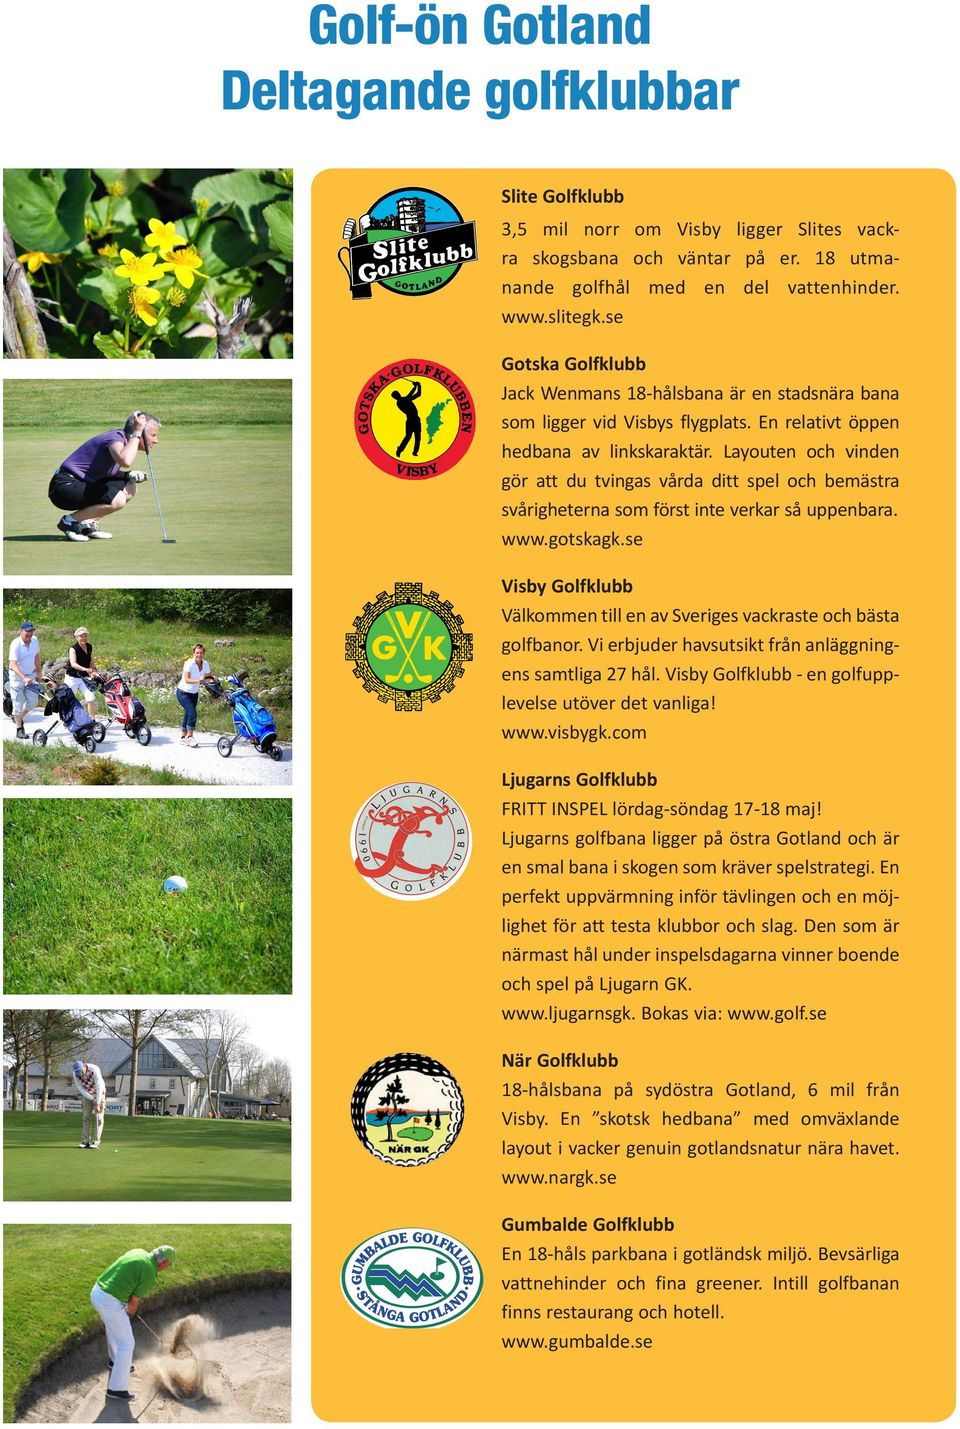 Spela Gotlands alla golfbanor i en tävling! - PDF Free Download